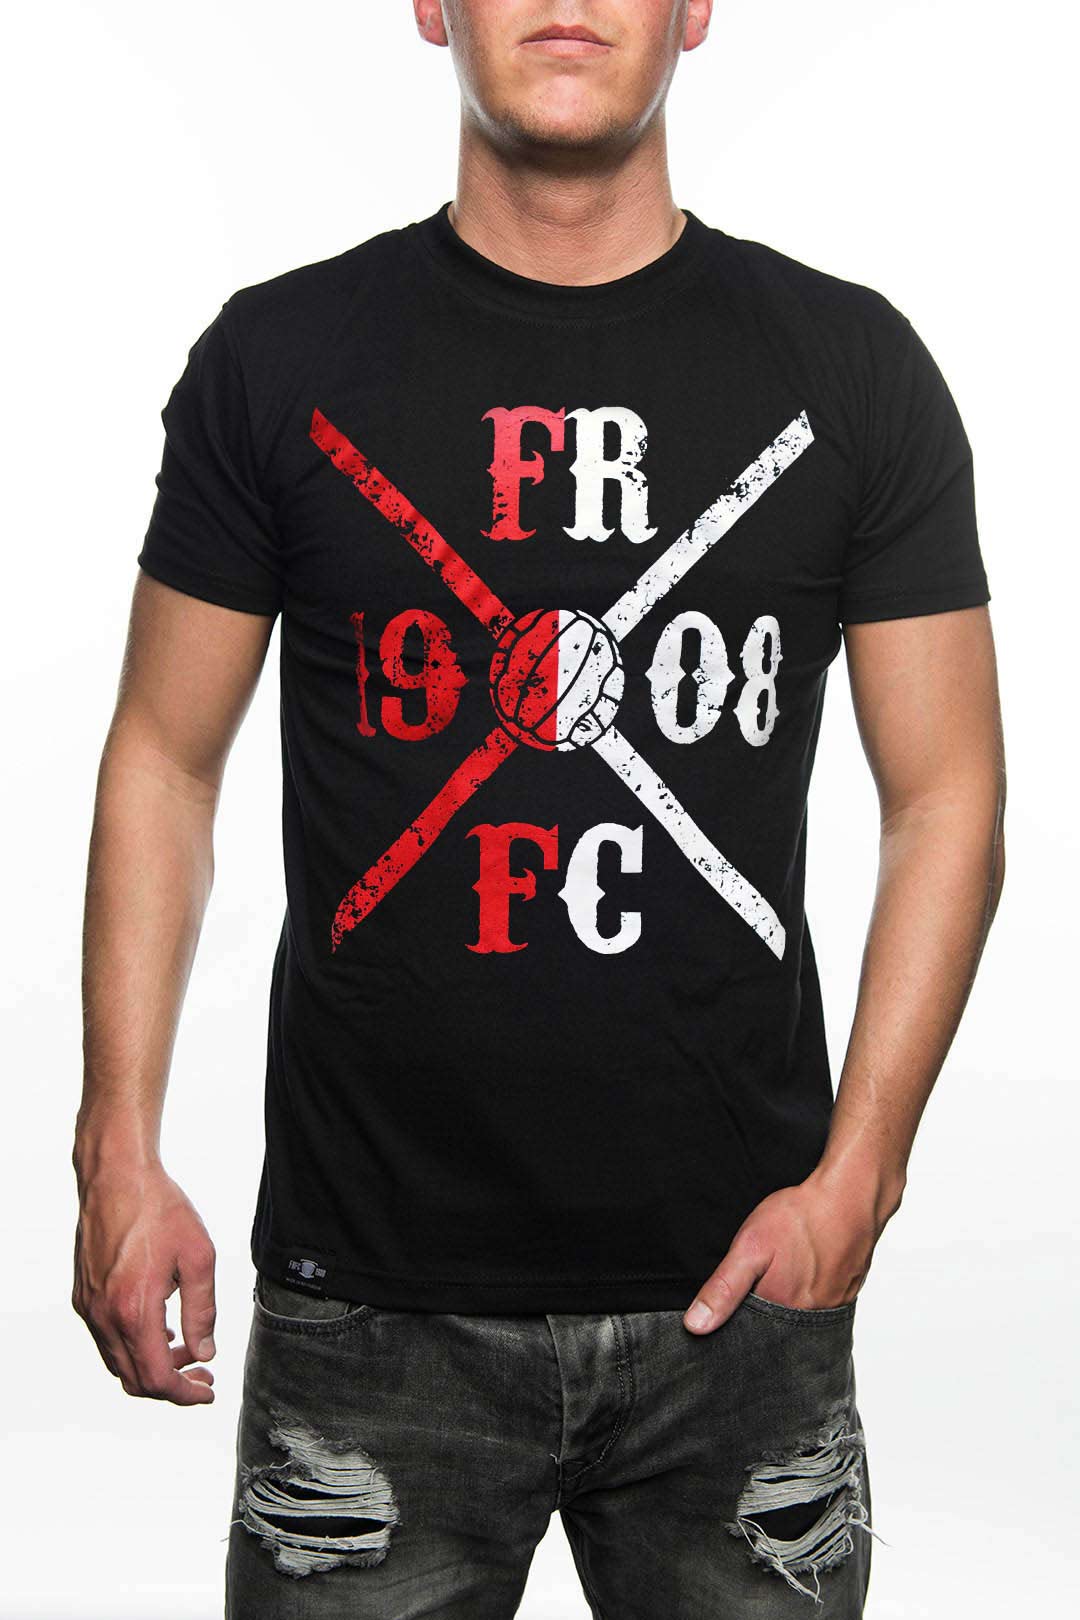 FRFC1908 Kruislogo shirt Rood/Wit